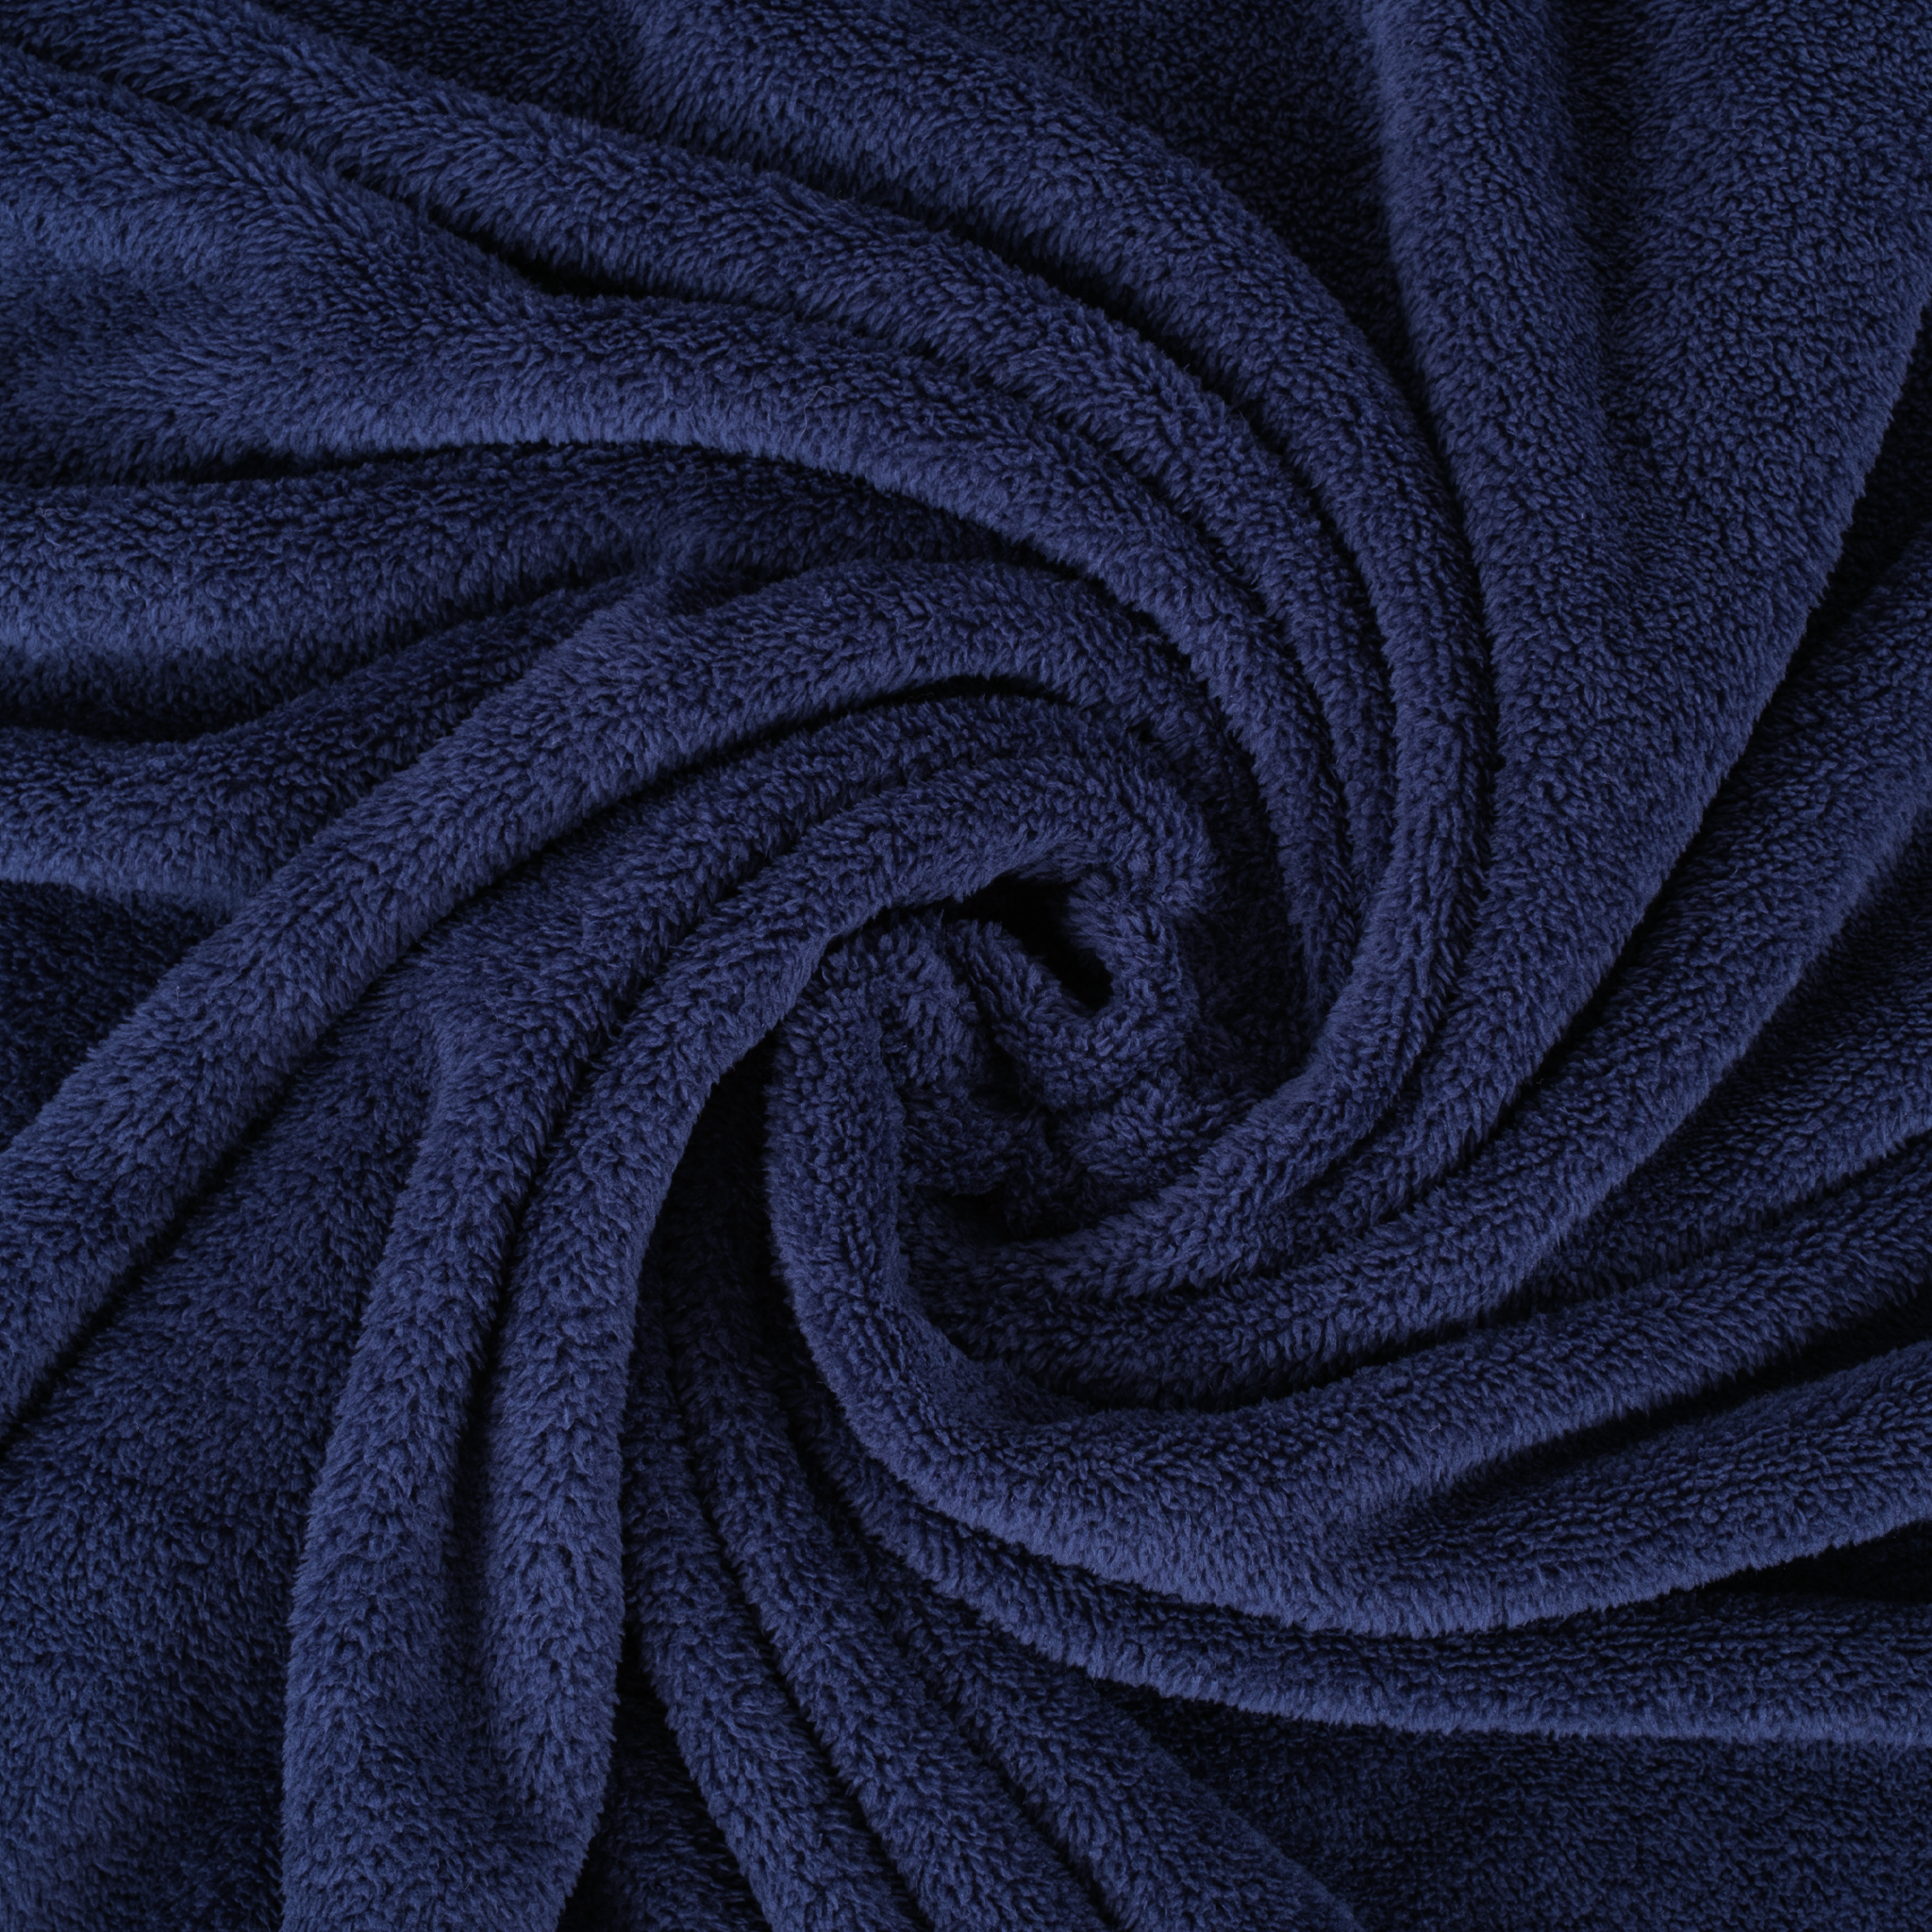 American Soft Linen - Bedding Fleece Blanket - Queen Size 85x90 inches - Navy-Blue - 5